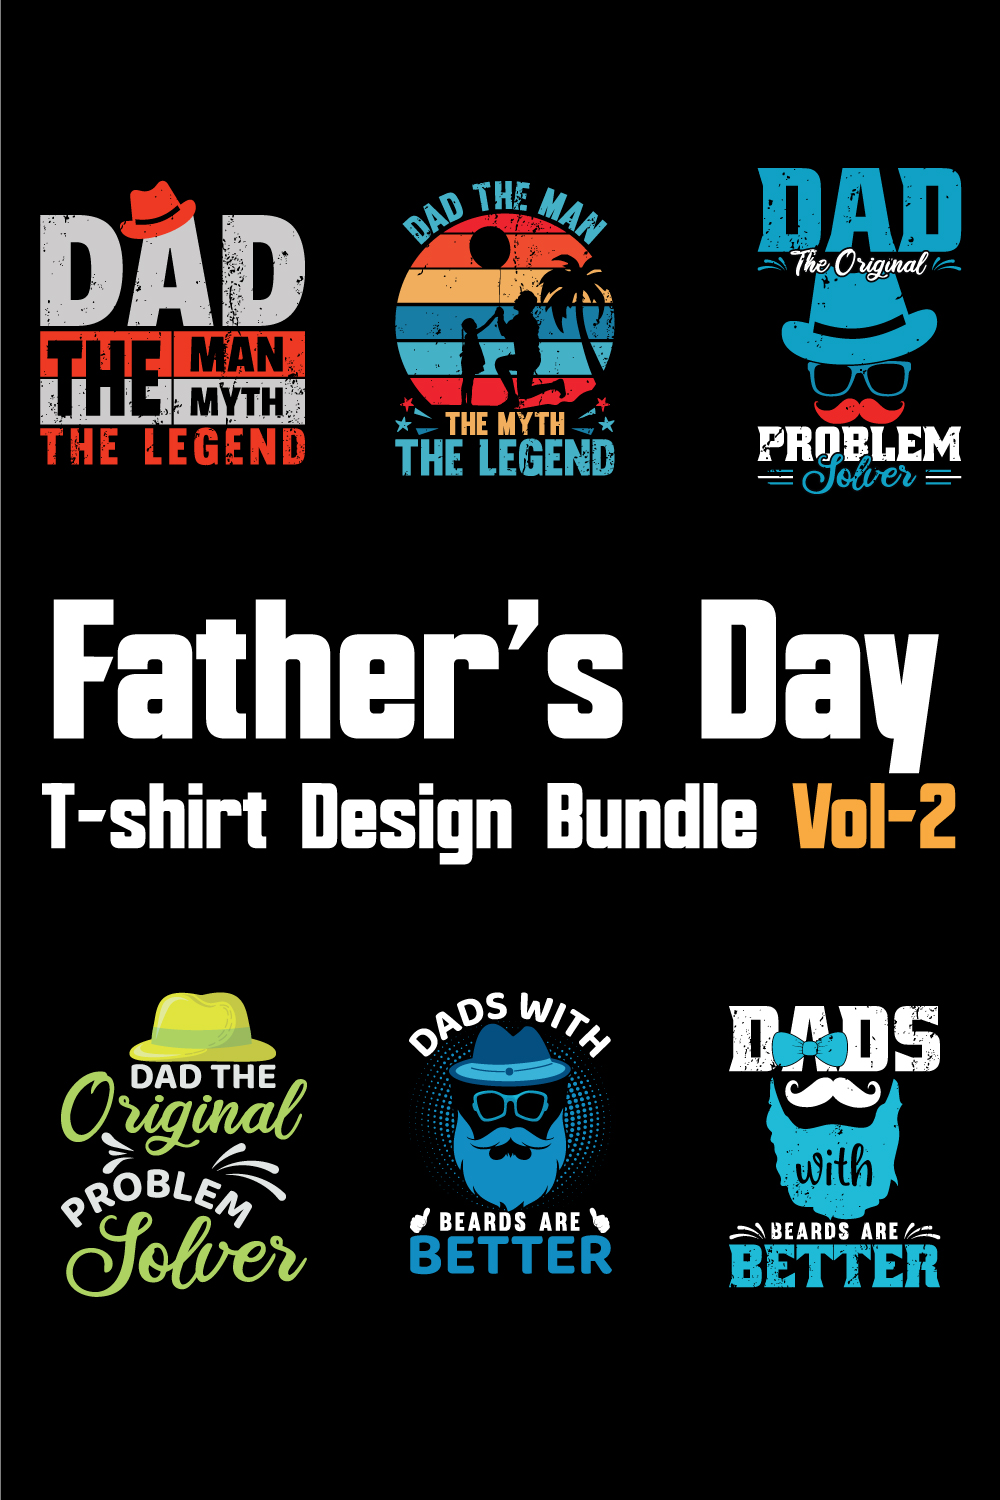 Father's Day T-shirt Design Bundle Vol-2 pinterest preview image.